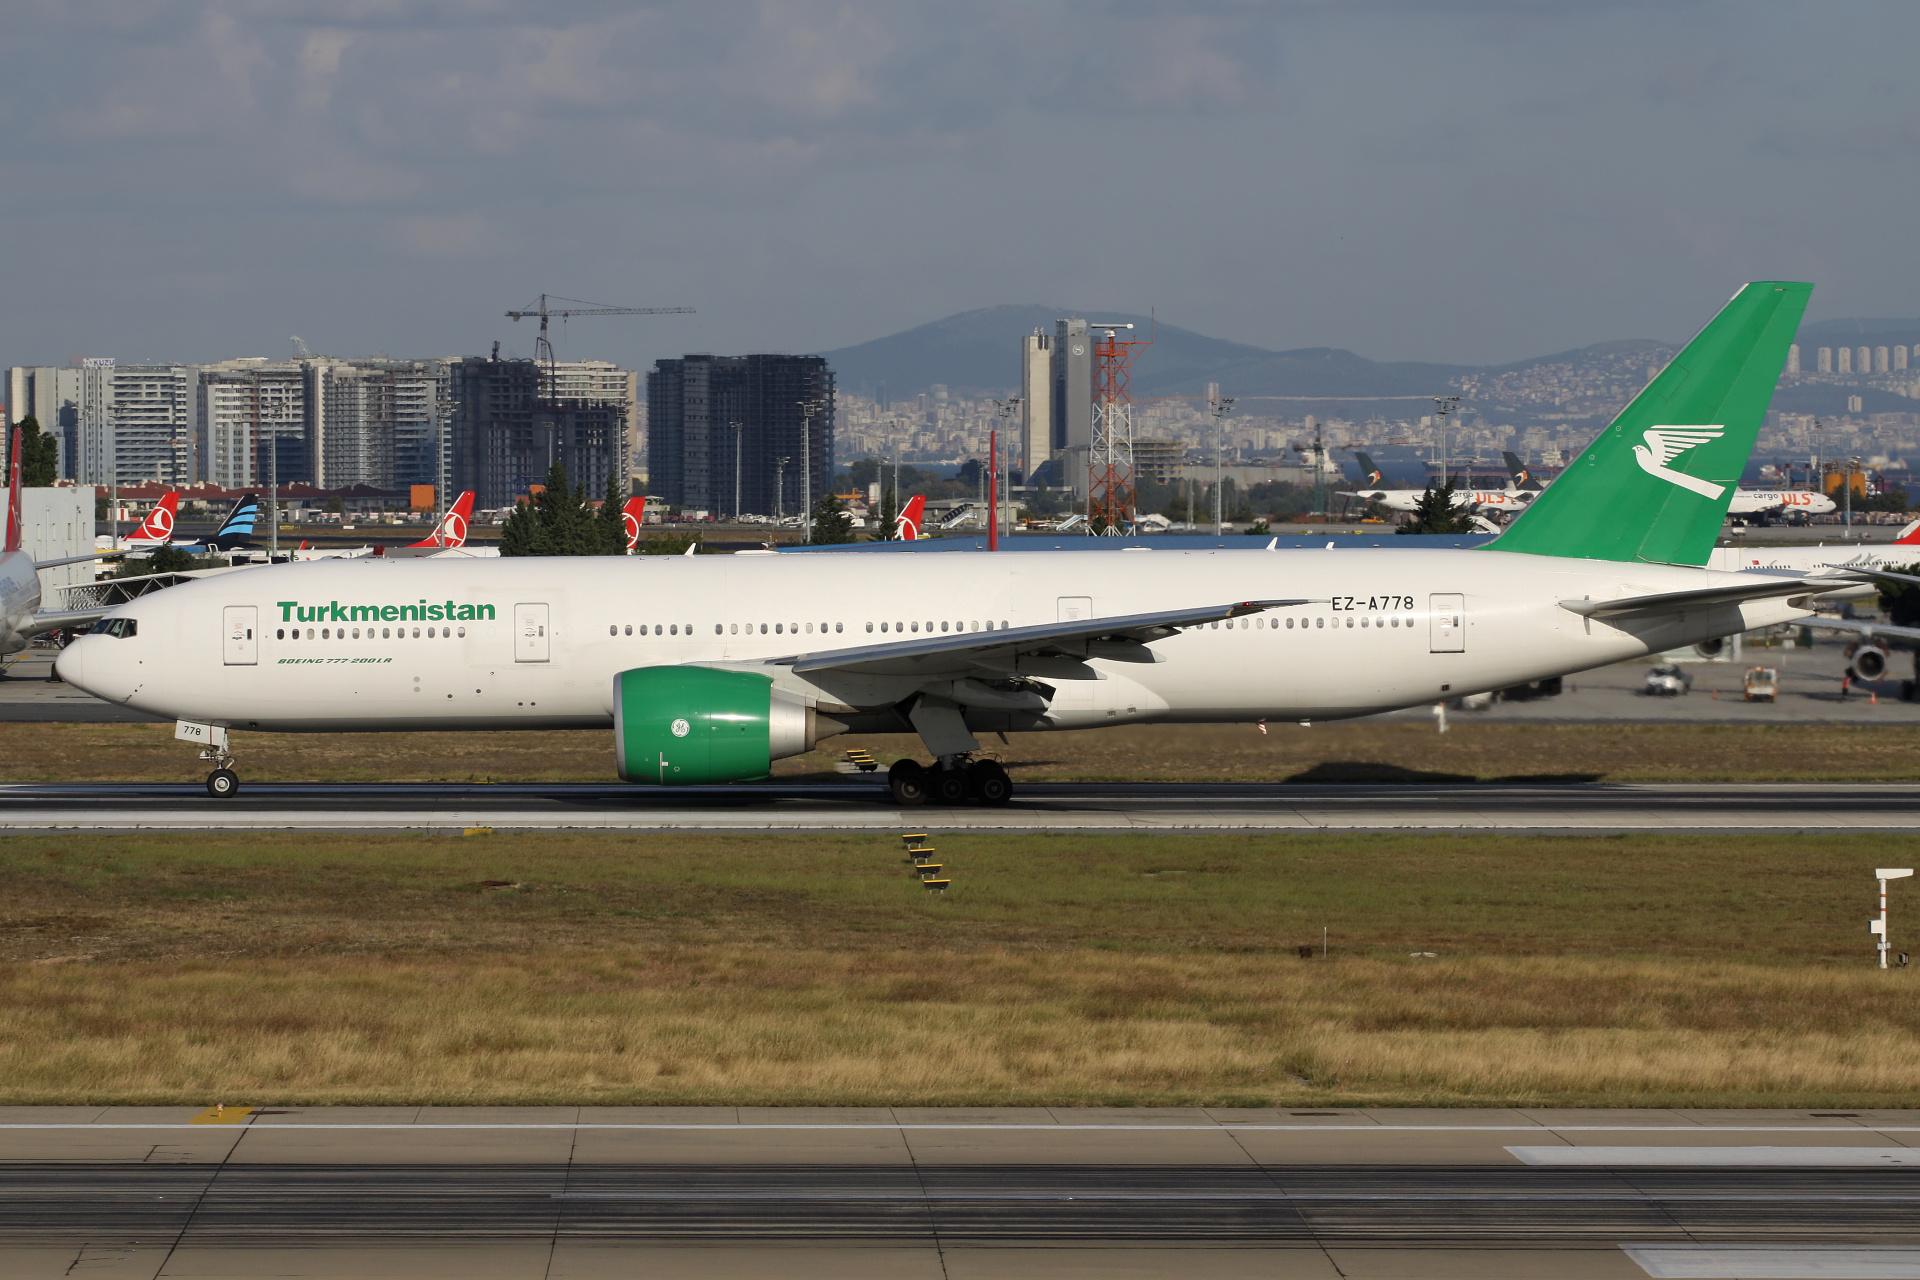 EZ-A778, Turkmenistan Airlines (Aircraft » Istanbul Atatürk Airport » Boeing 777-200LR)